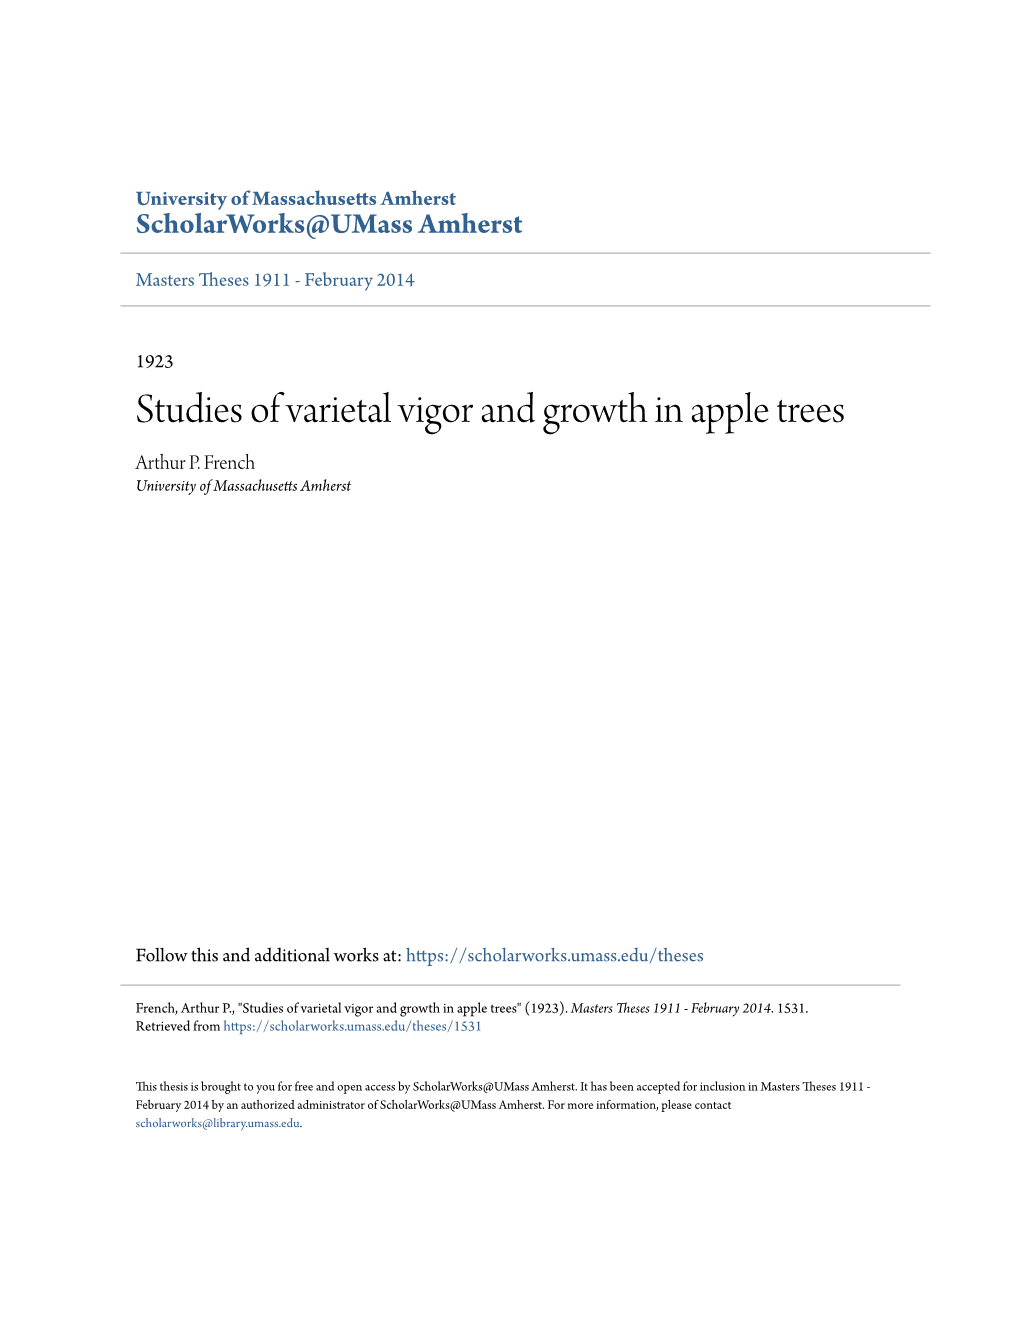 Studies of Varietal Vigor and Growth in Apple Trees Arthur P